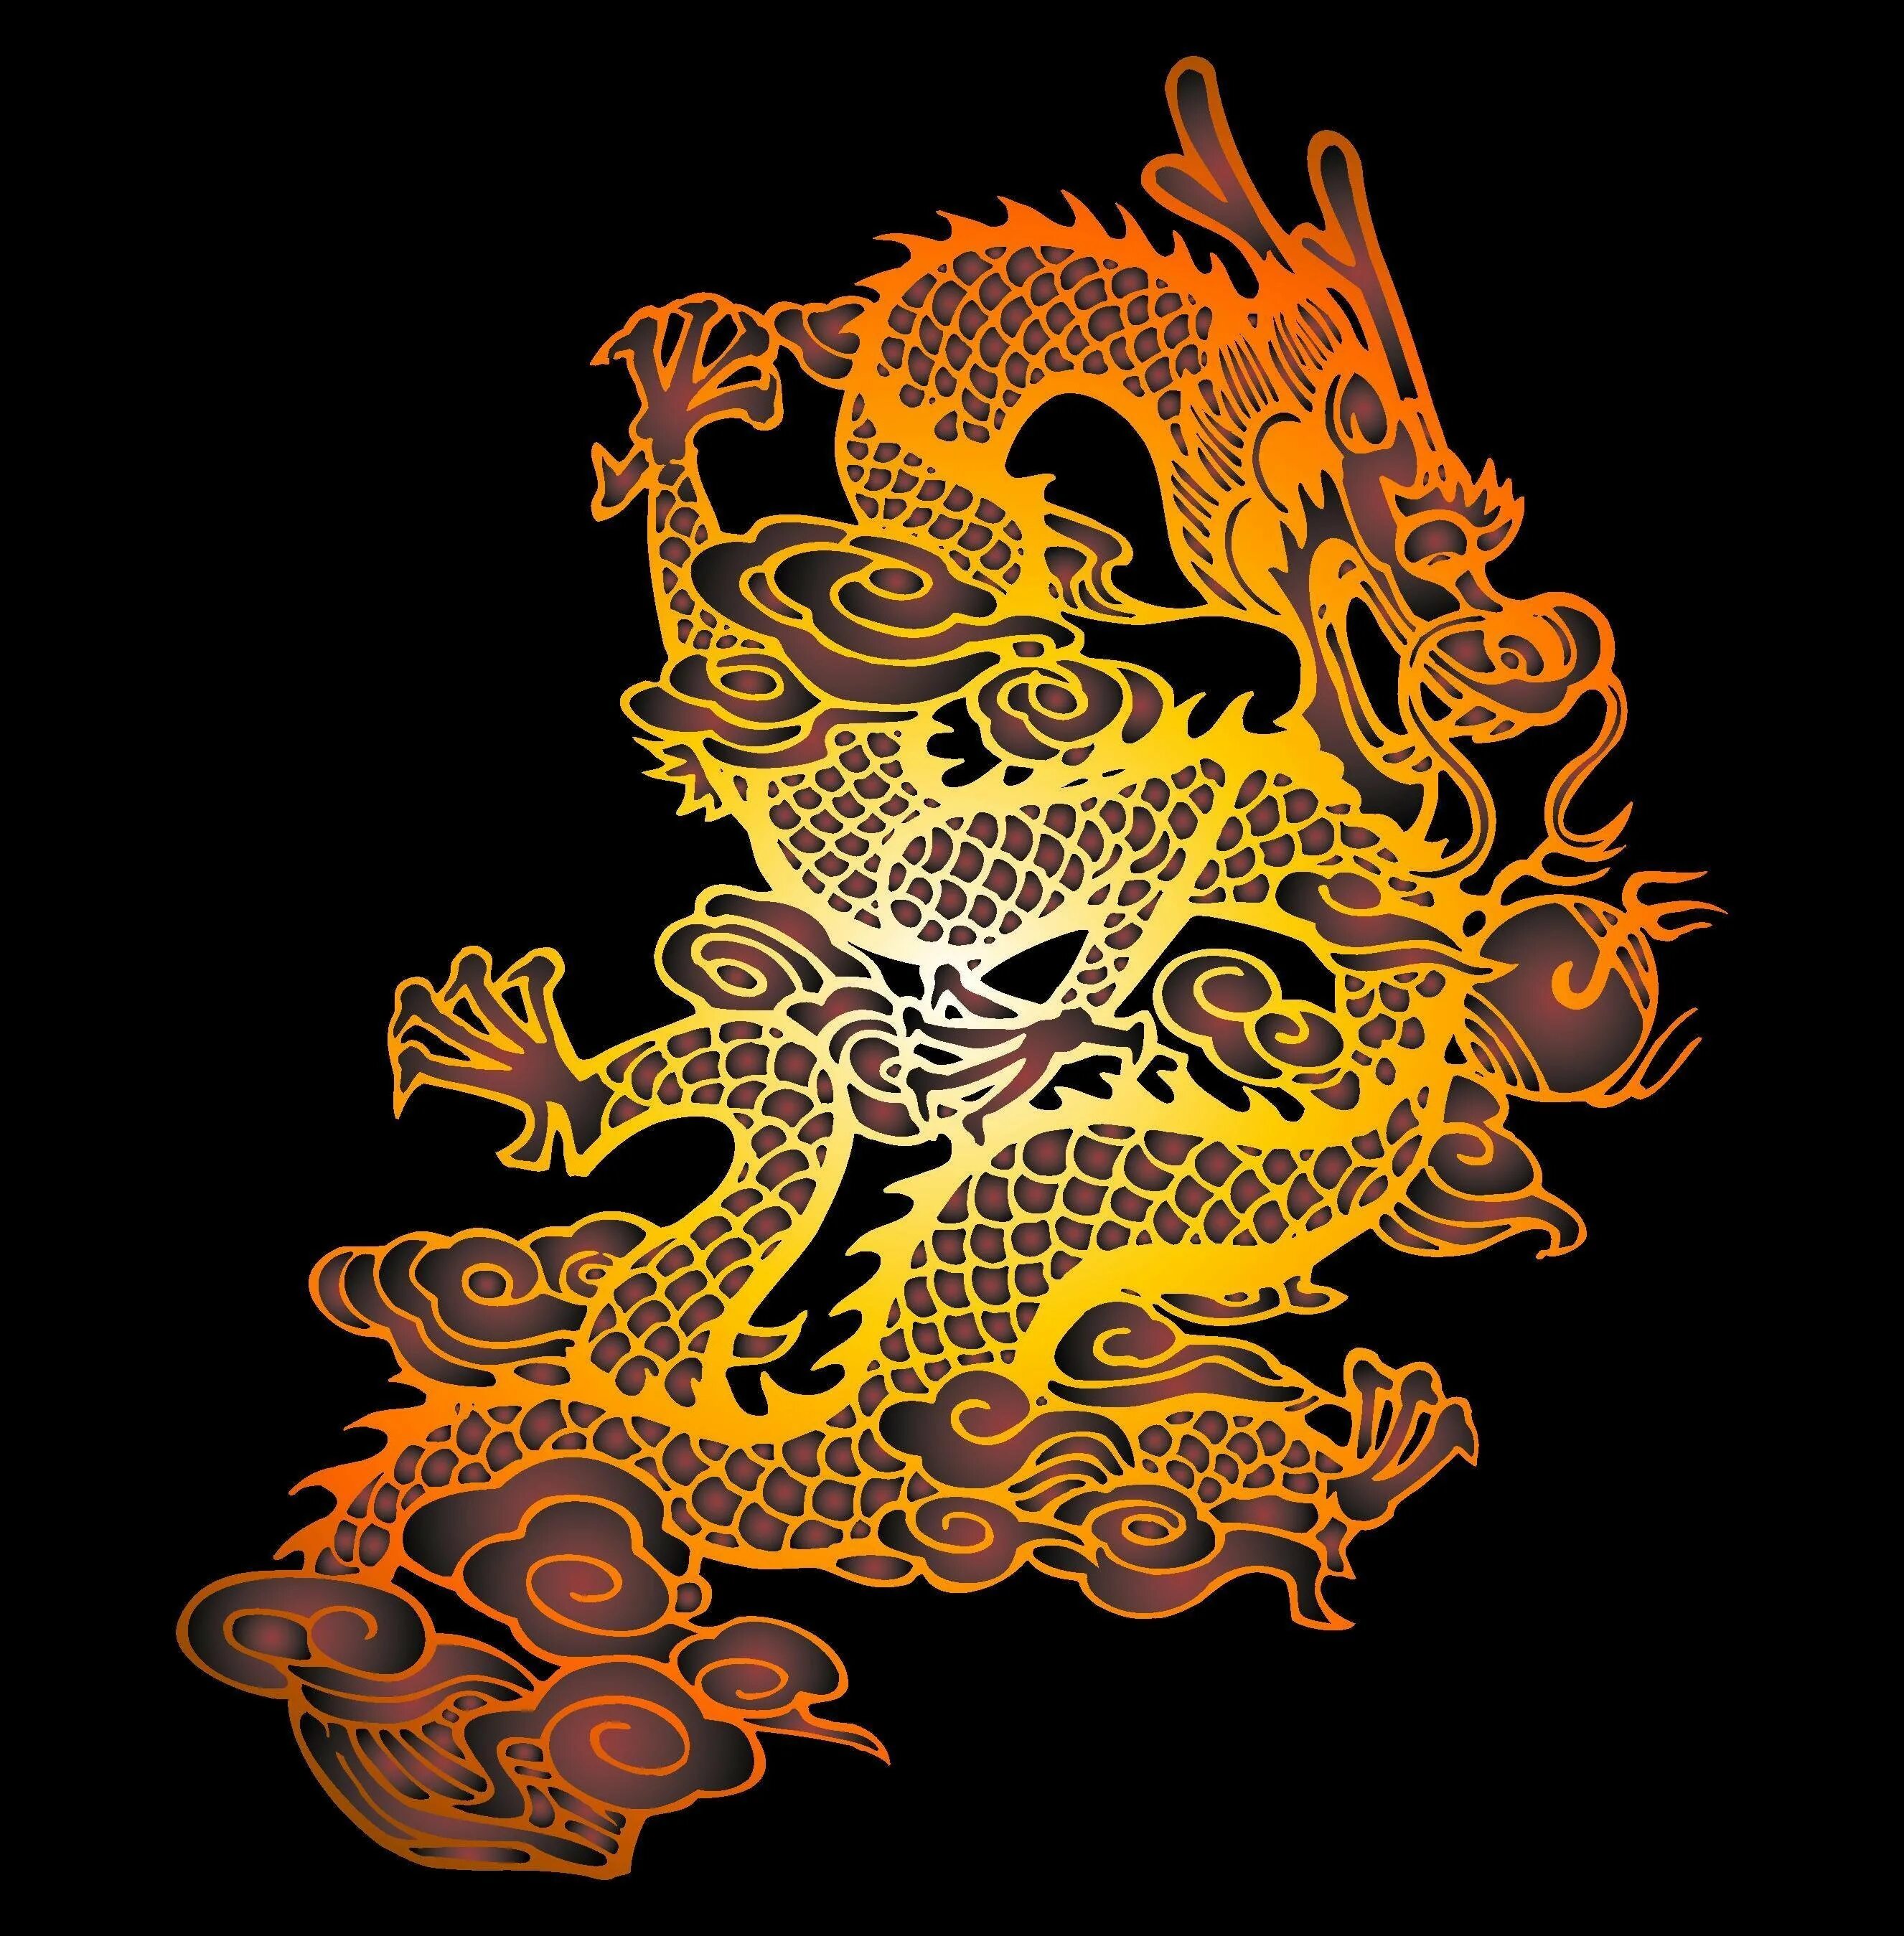 Златошип. Голден дракон золотой дракон. Китайский дракон. Китайский дракон на черном фоне. Японский дракон на черном фоне.